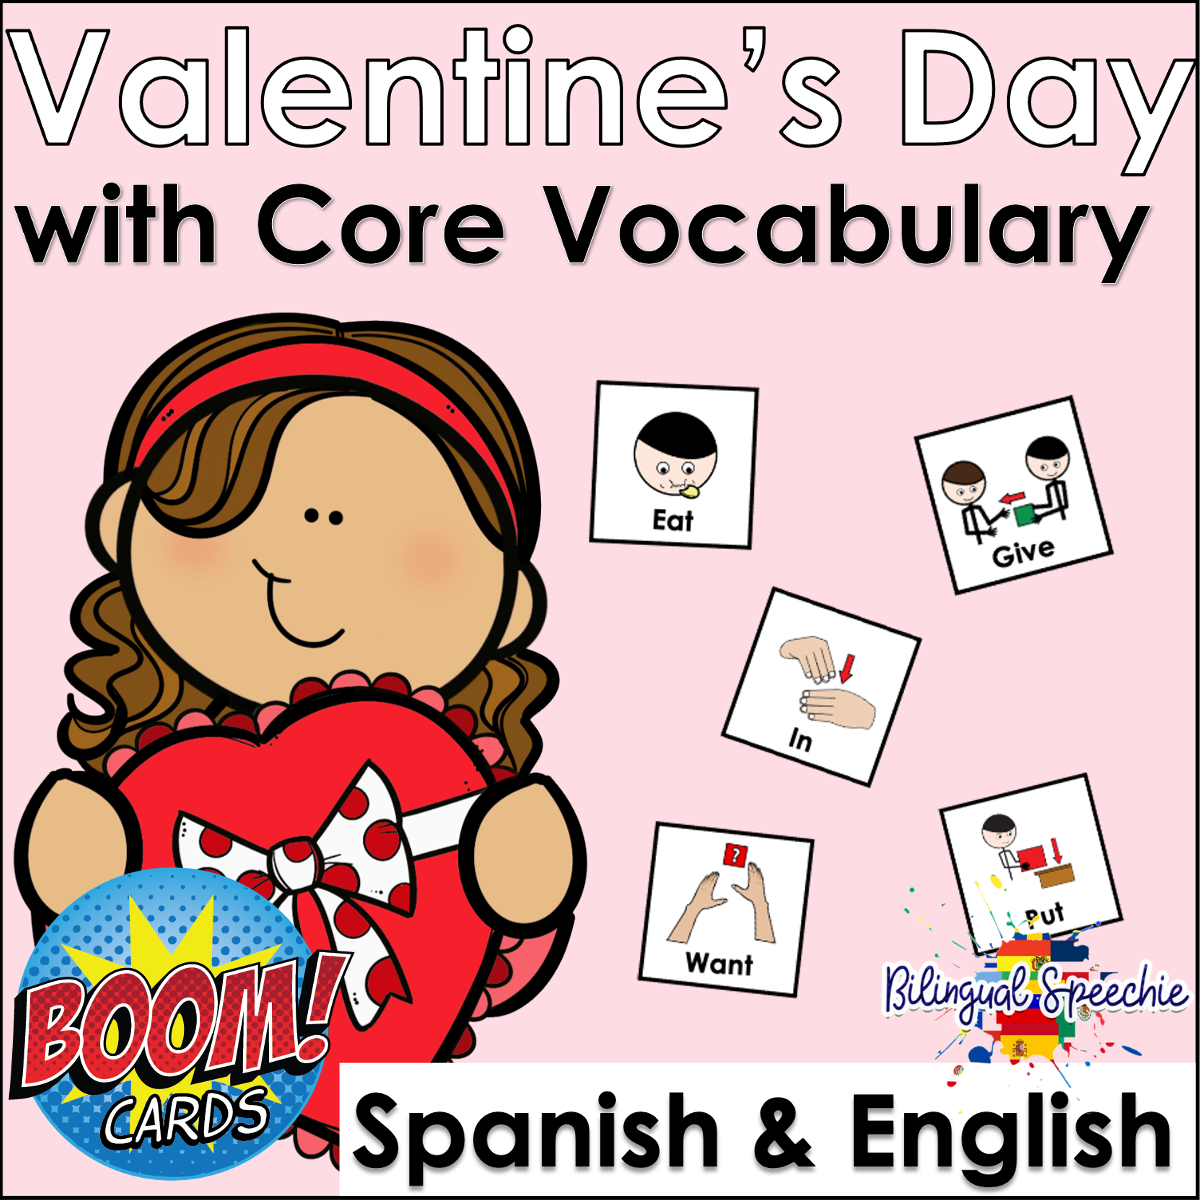 Valentine's Day with Core Vocabulary | Spanish & English